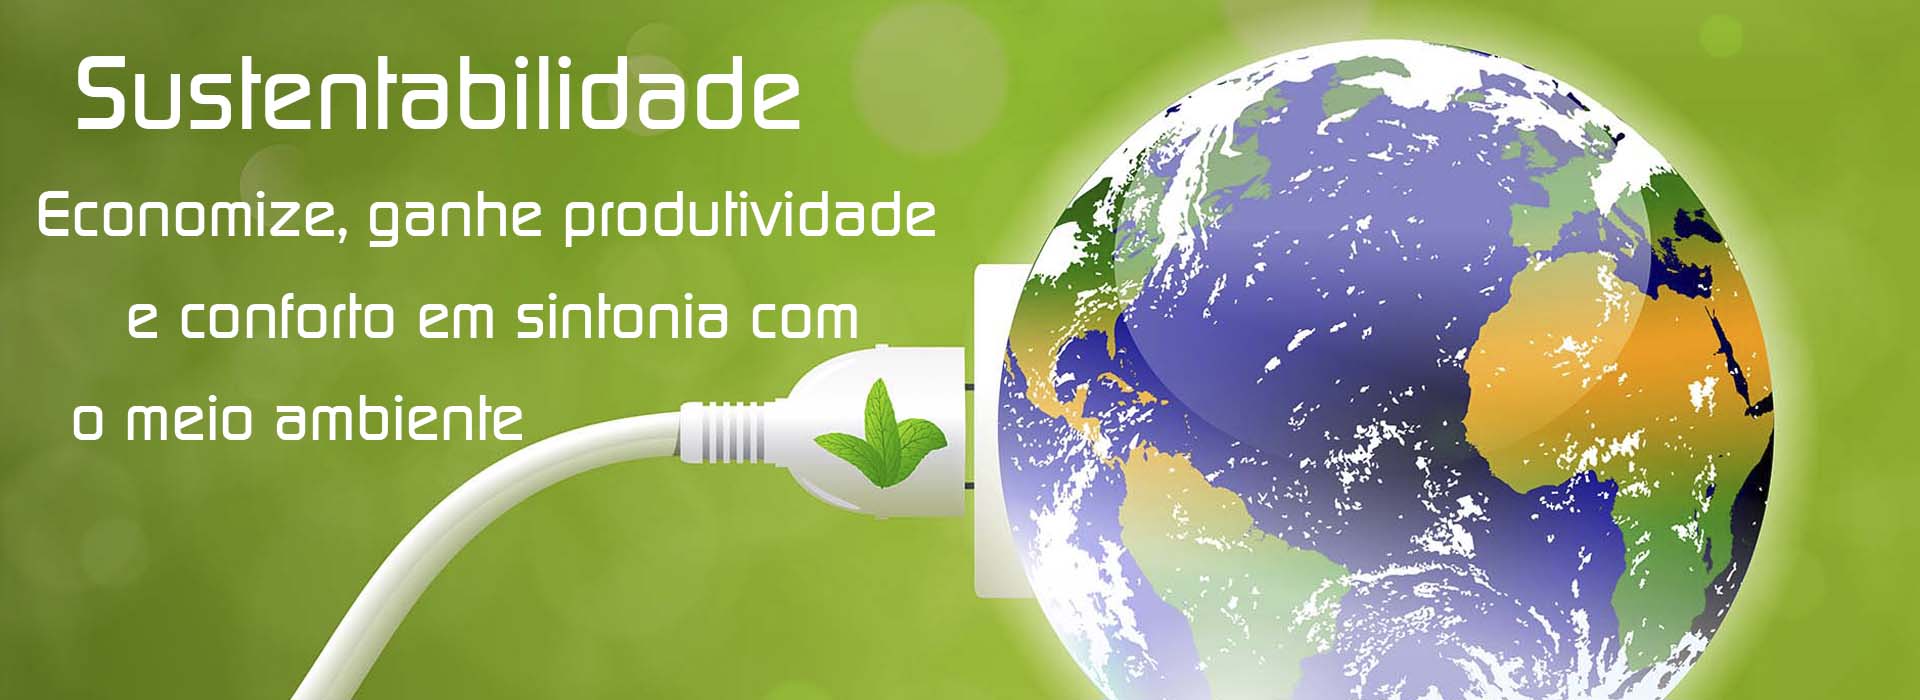 Energia Solar Salvador Bahia - Reconluz - Família Bitencourt